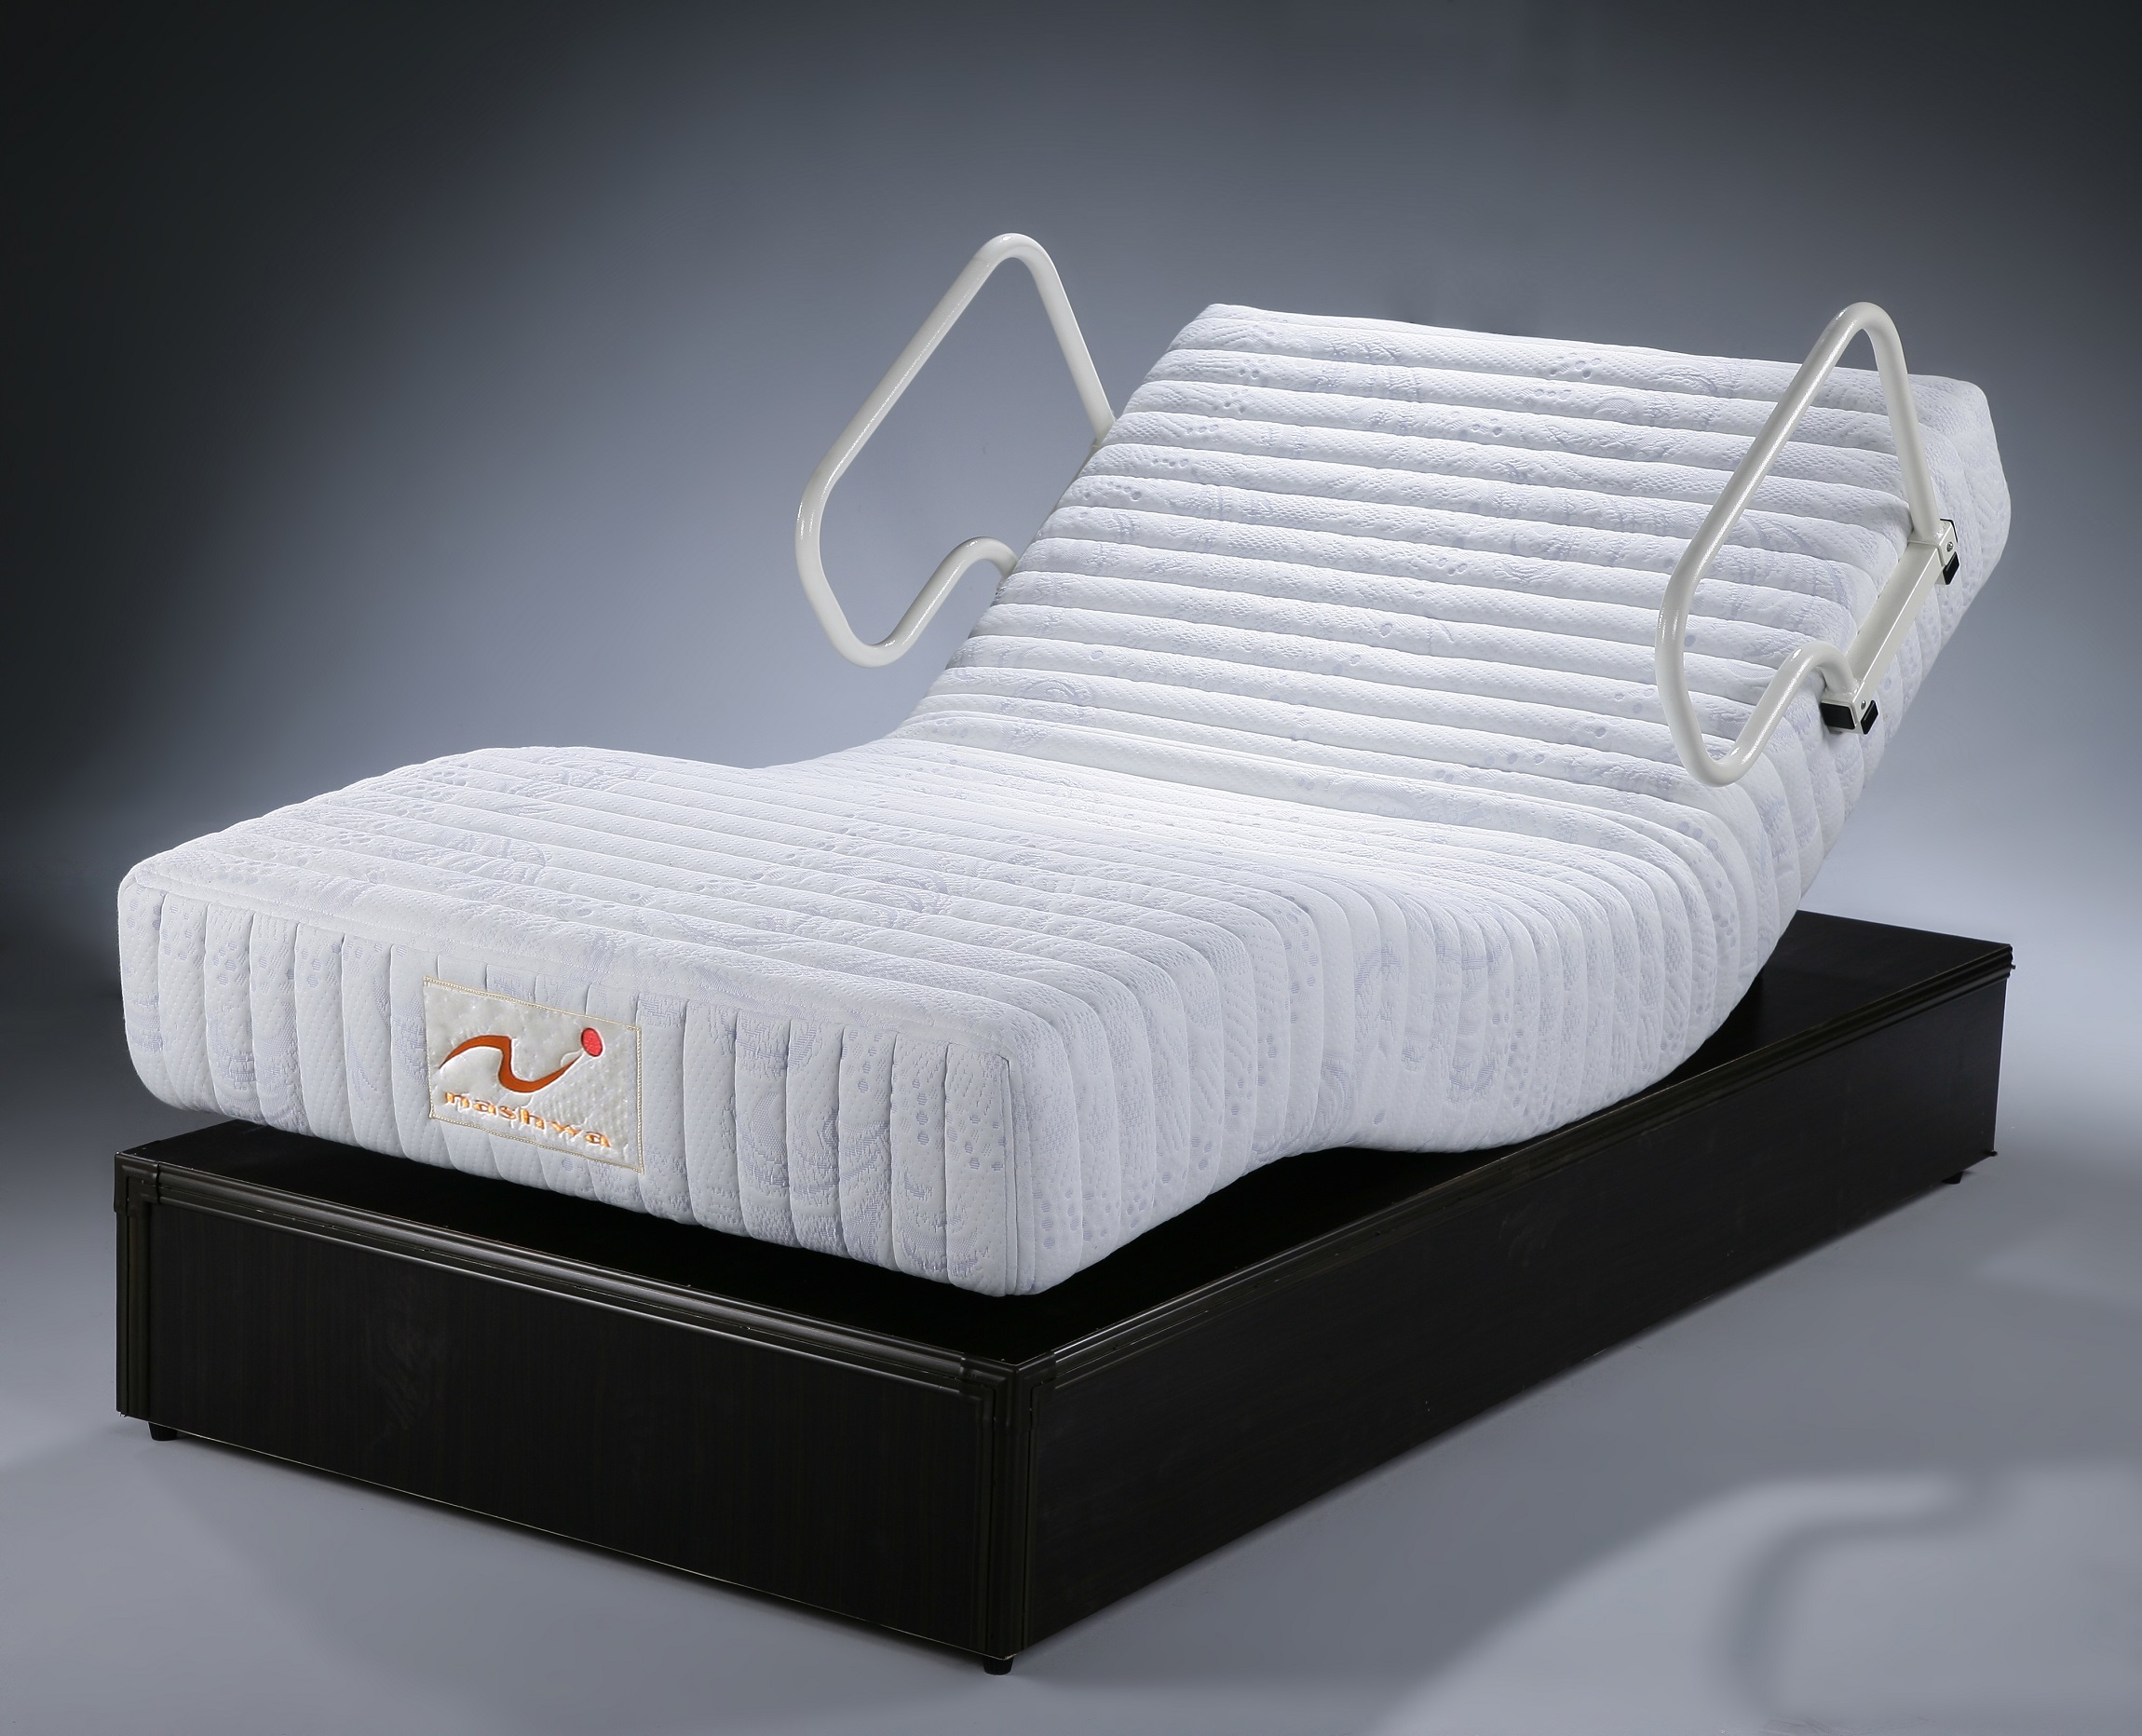 mattress firm electric bed frame